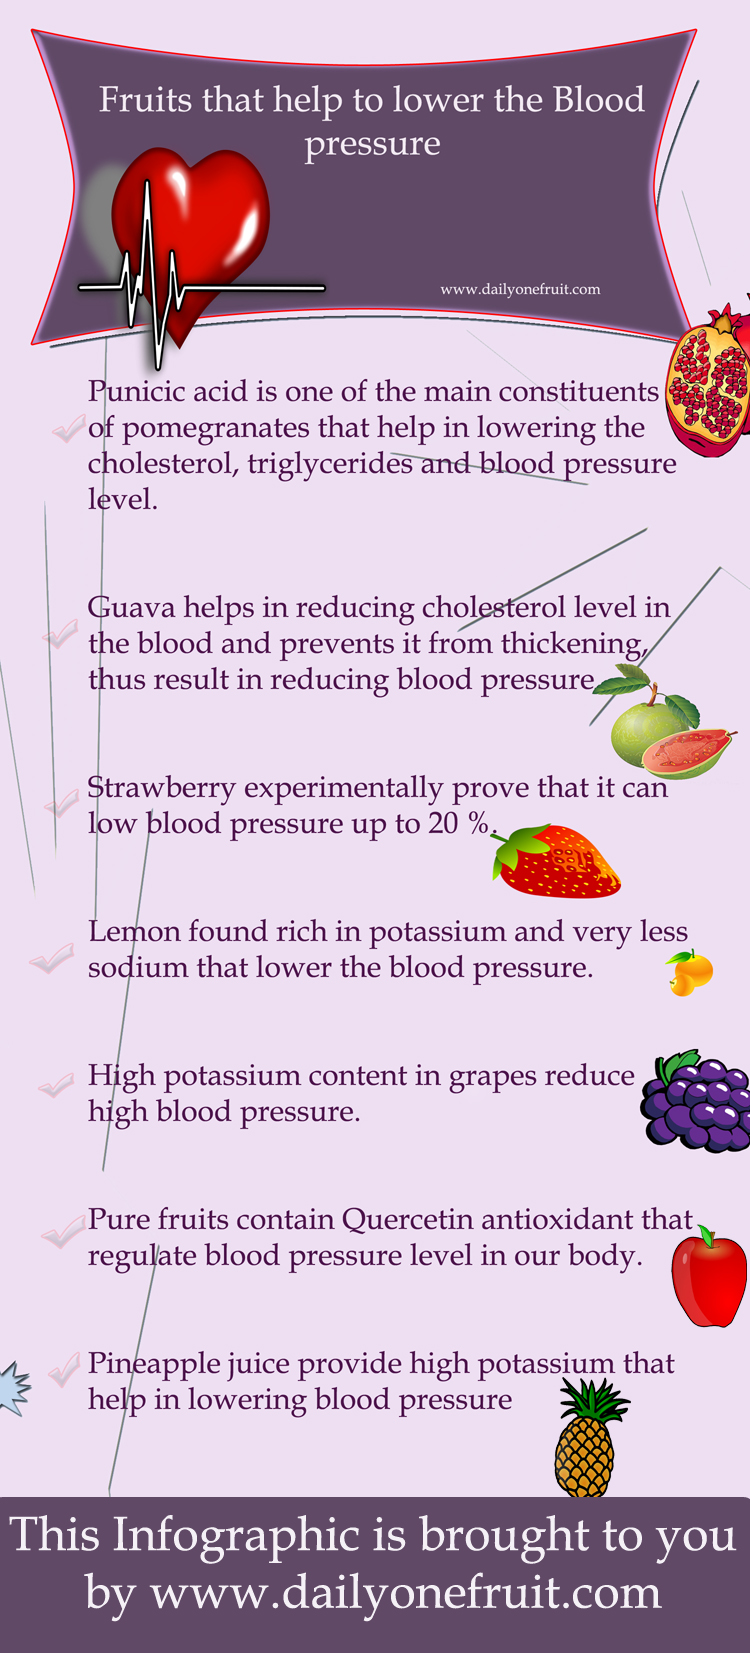 how does pineapple juice lower blood pressure